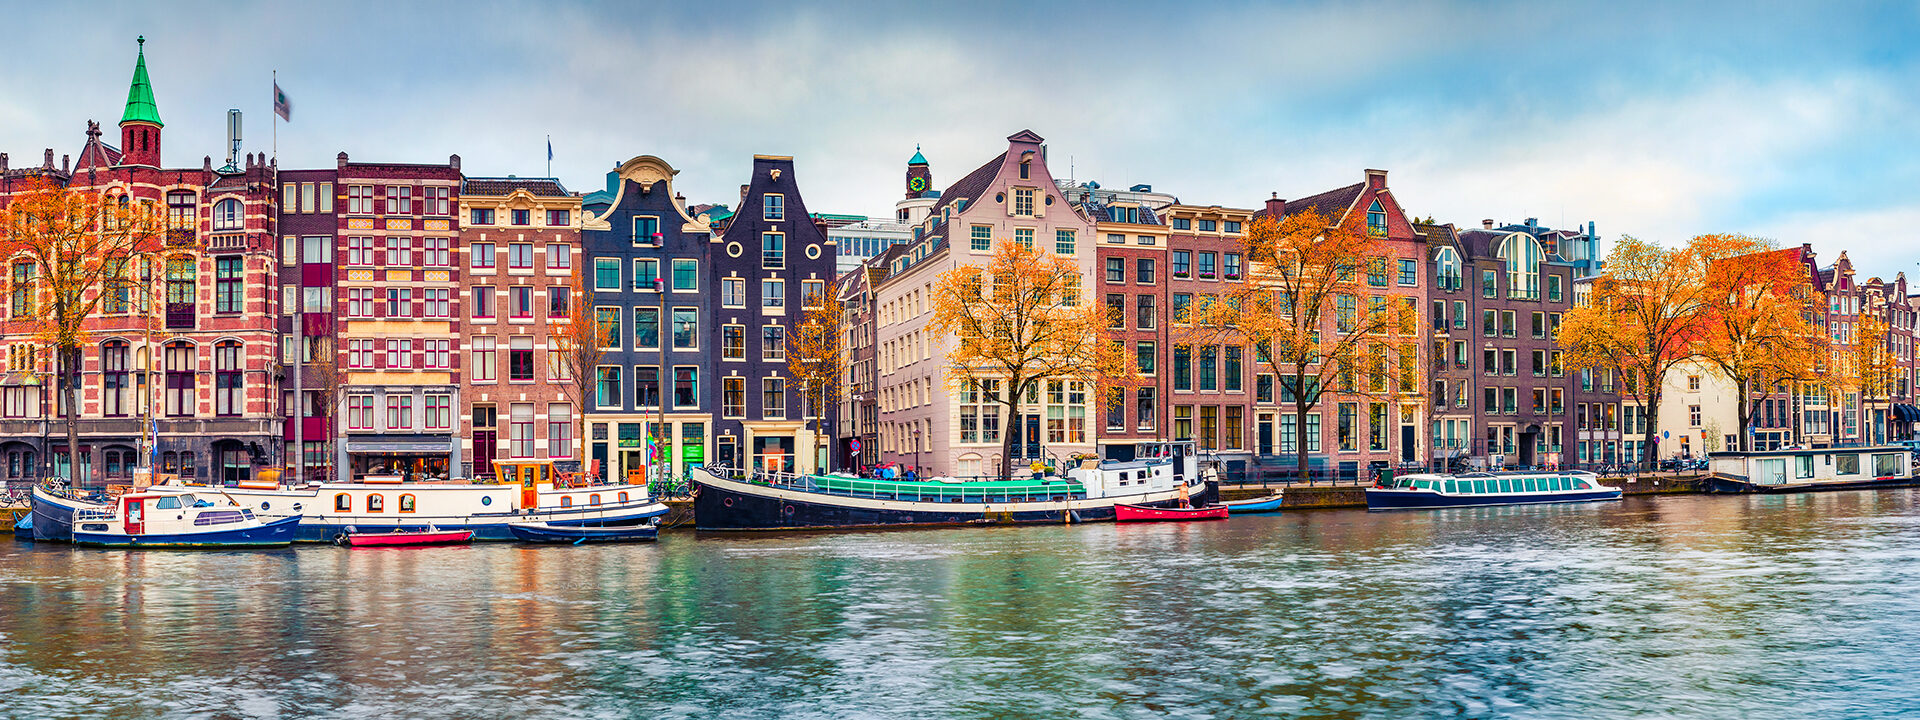 Du lịch Amsterdam - Venice của phương Bắc